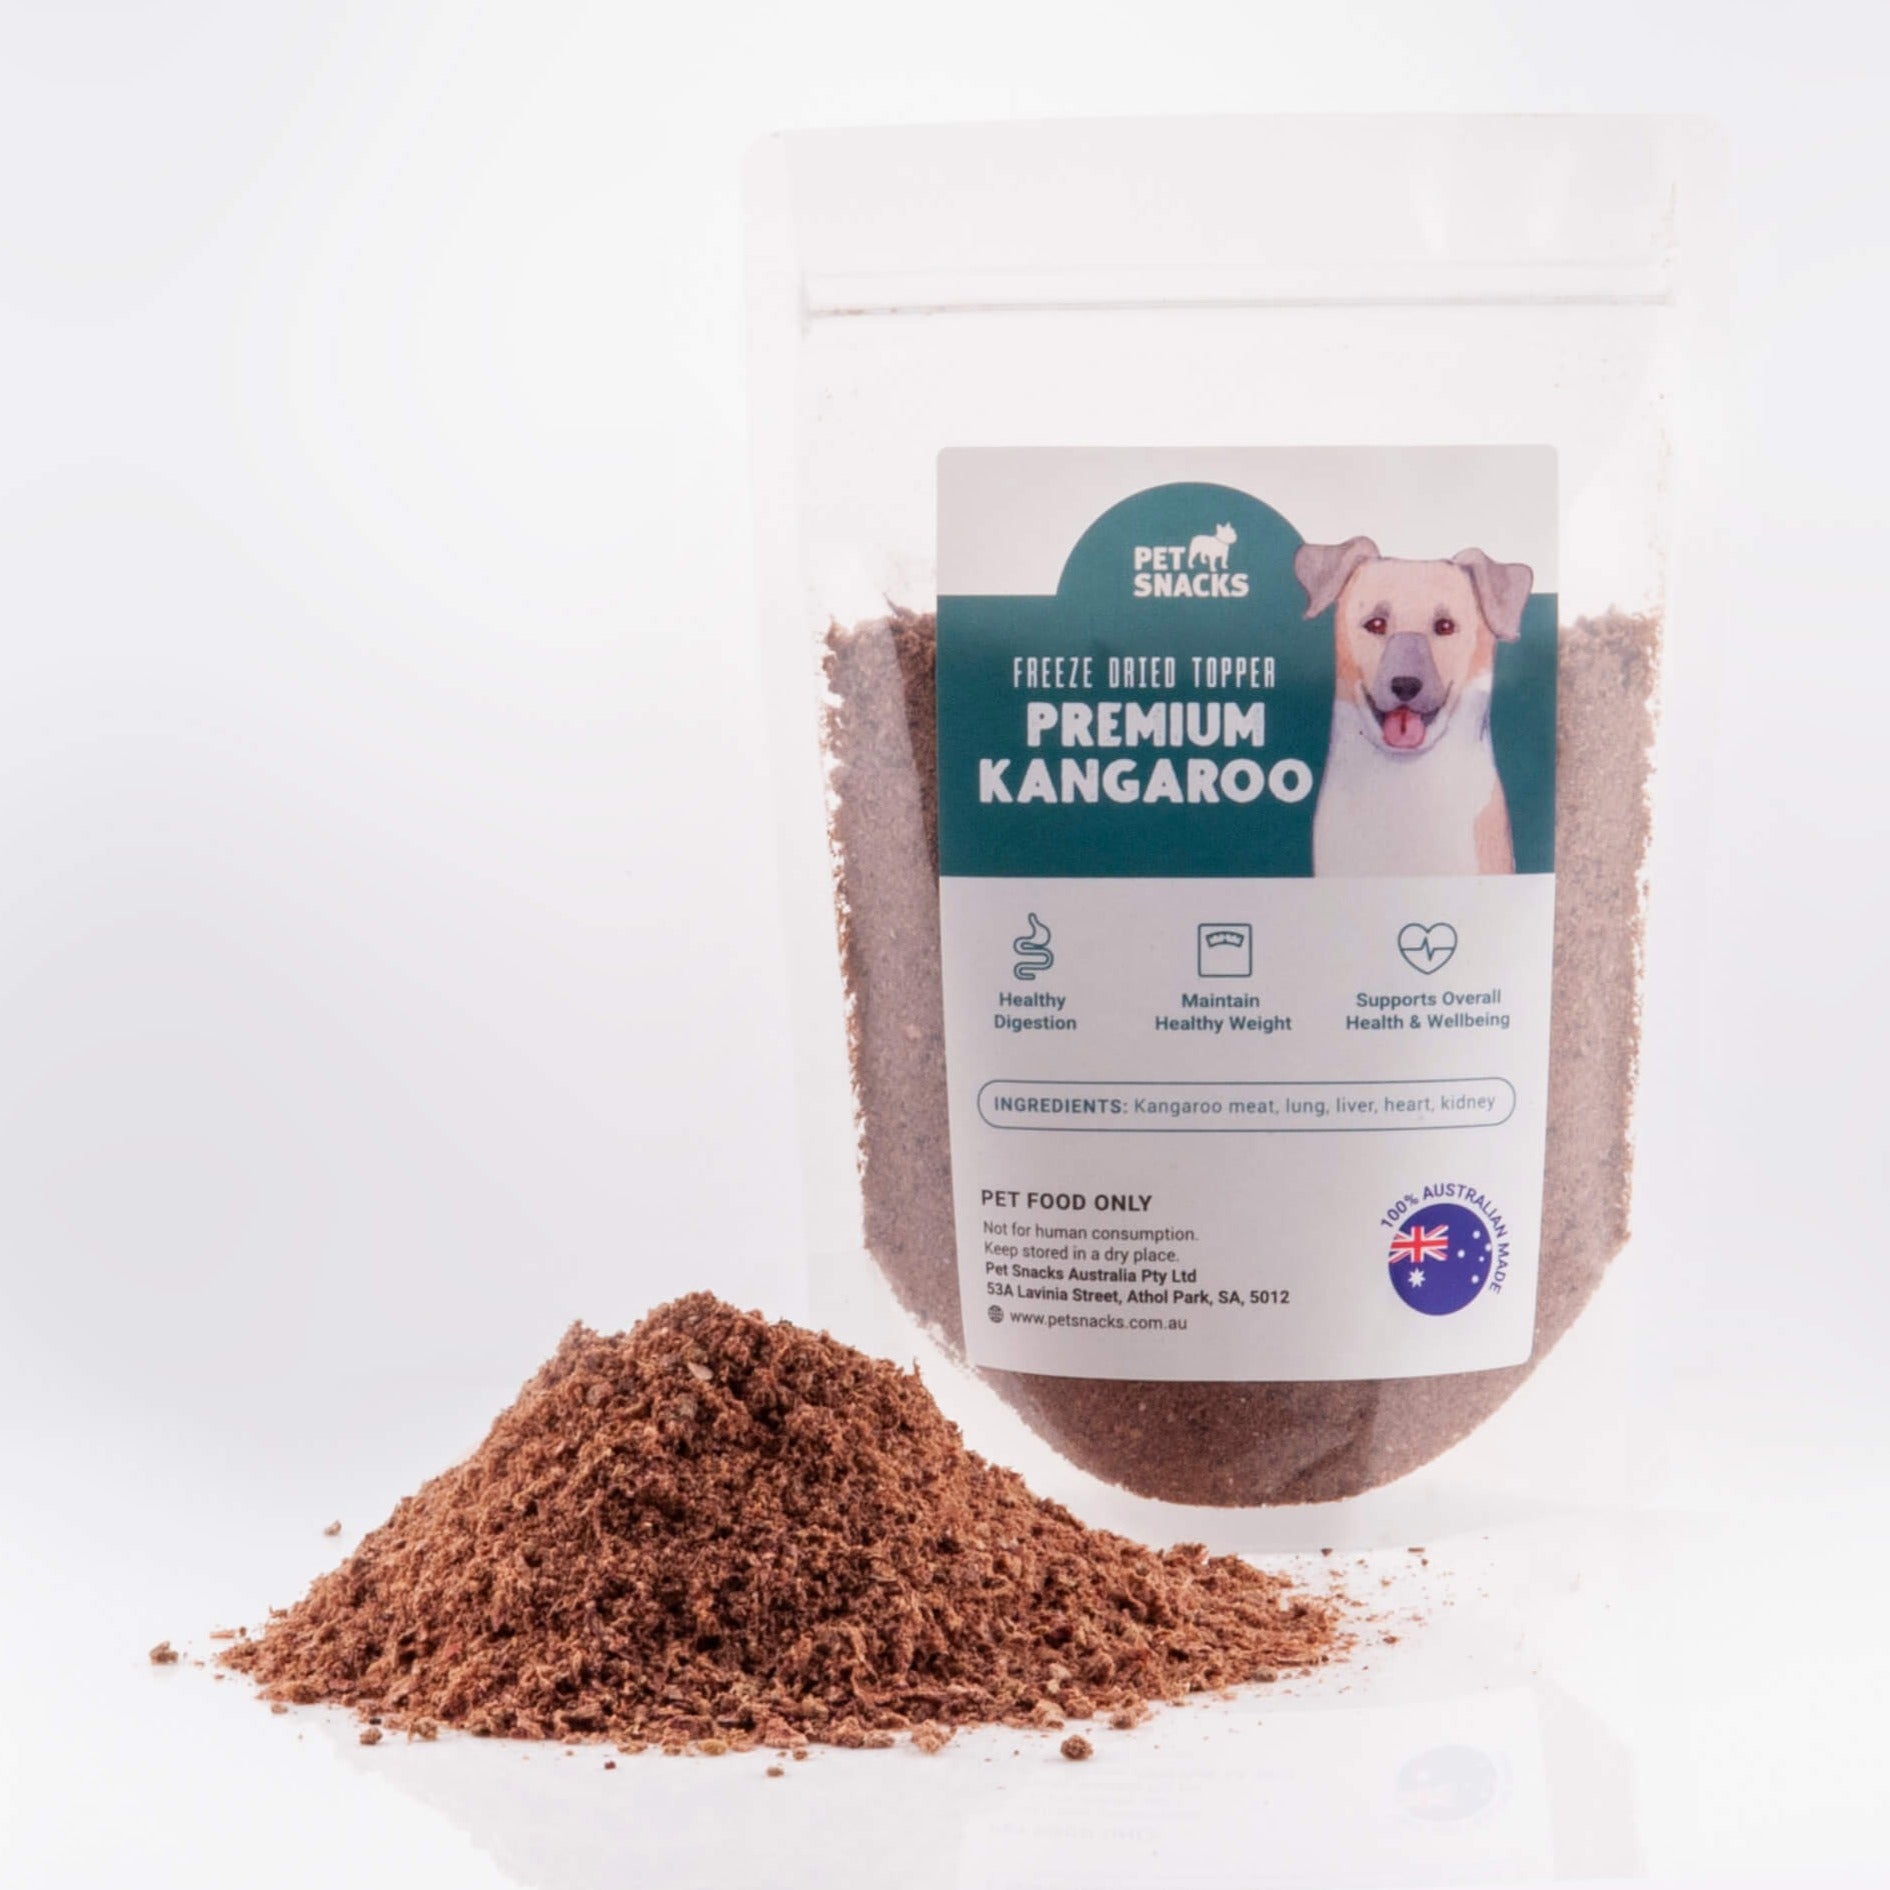 Freeze Dried Topper - Kangaroo Dog Treats Pet Snacks 